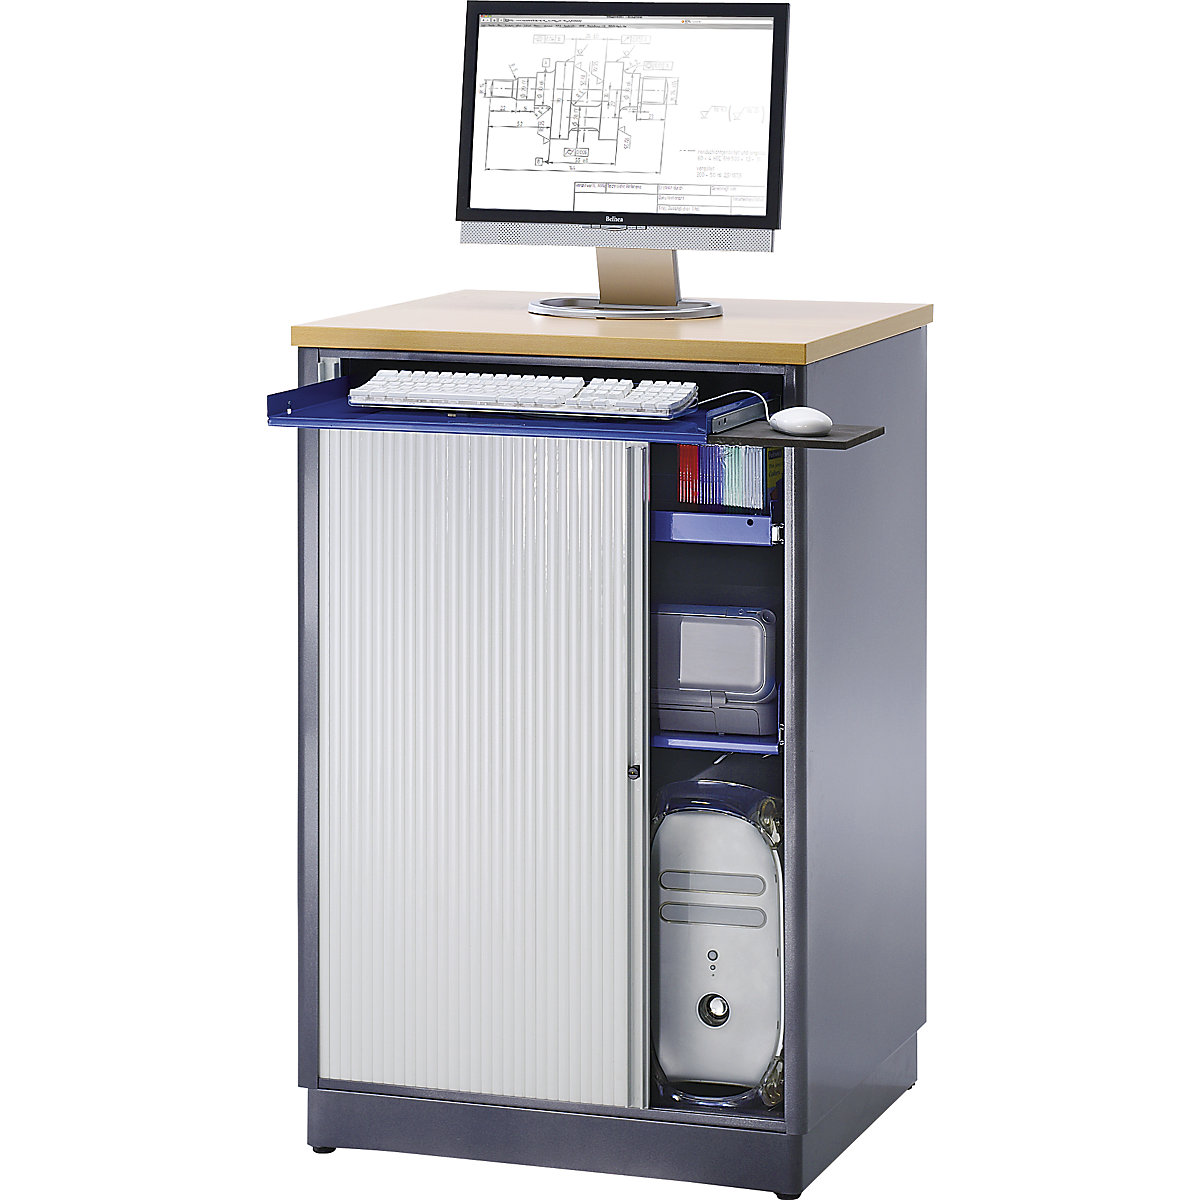 Počítačové pracoviště – RAU, v x š x h 1100 x 720 x 660 mm, antracitová metalíza / enciánová modrá-14